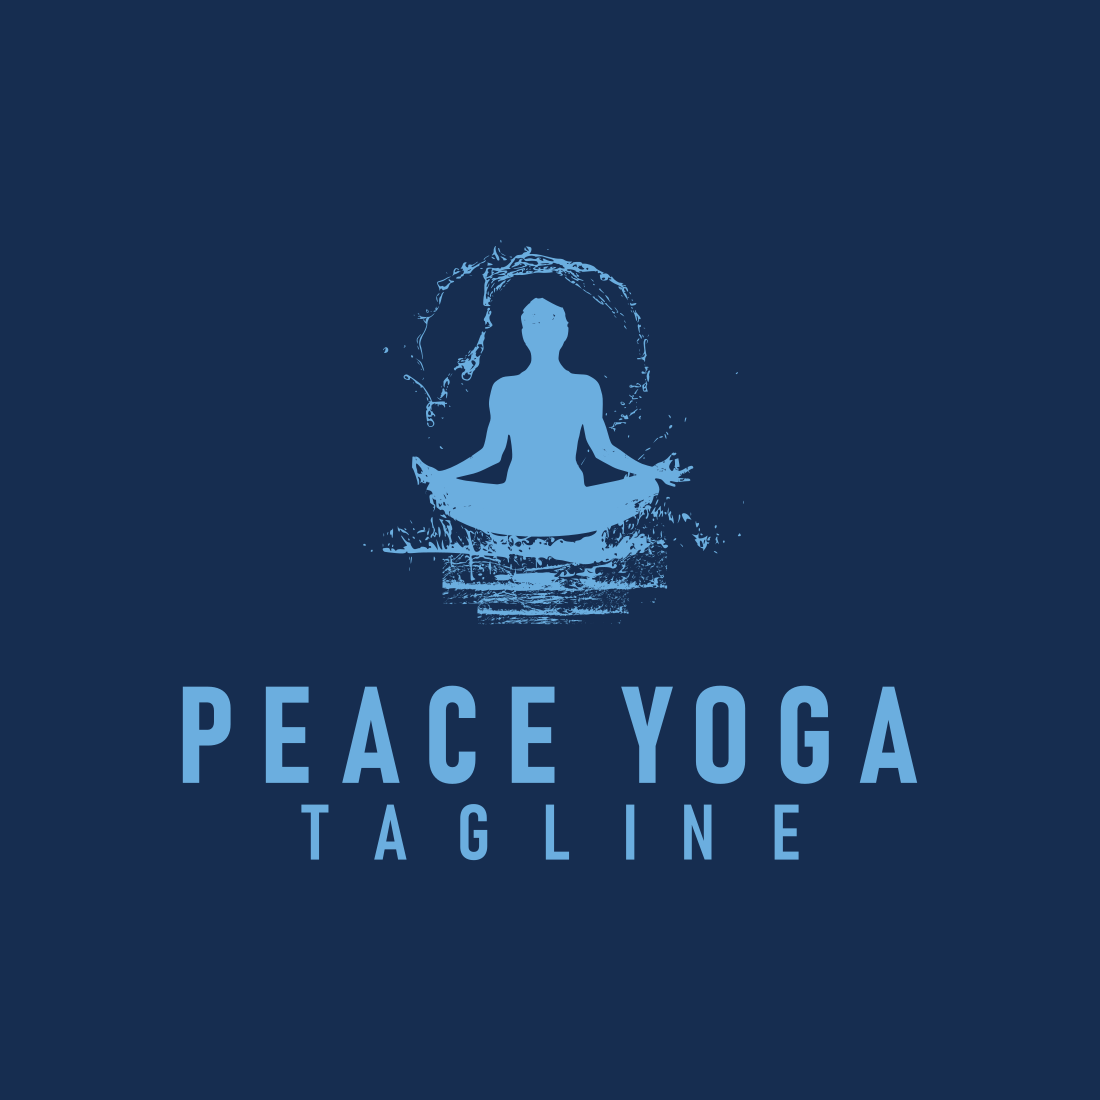 Yoga Meditation Custom Design Logo cover image.